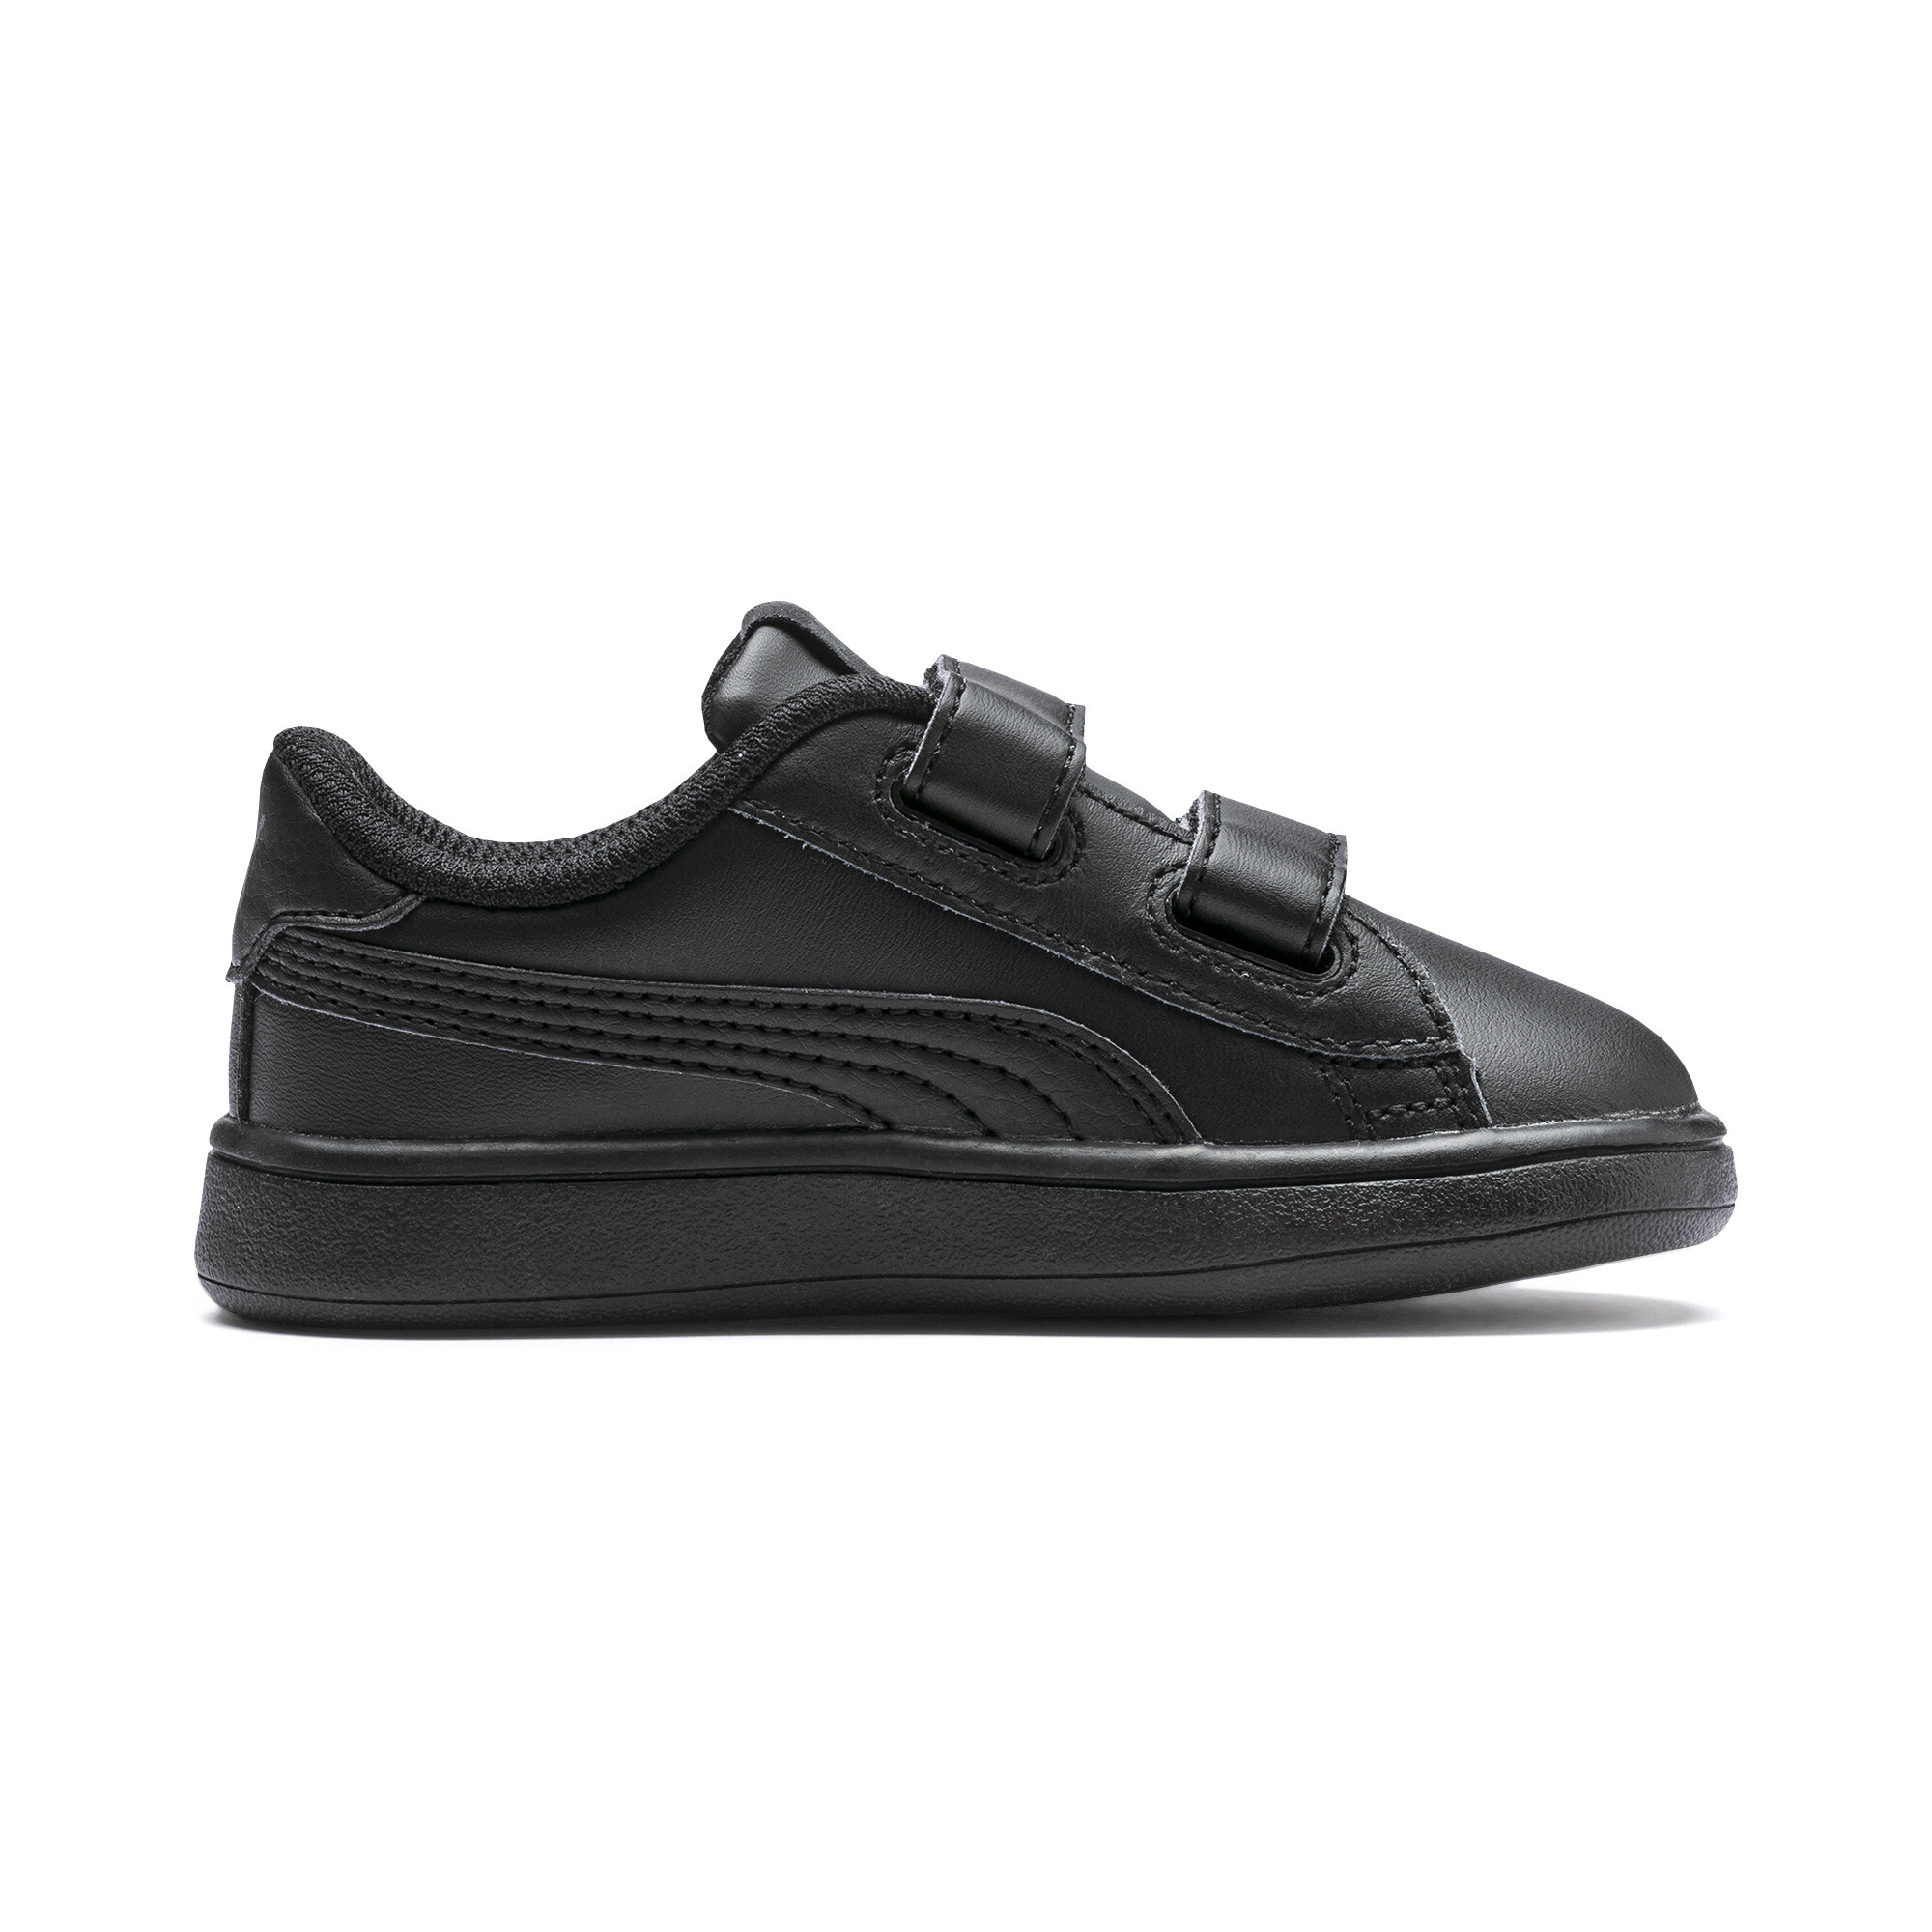 Kids' PUMA Smash V2 Trainers Shoes In Black, Size EU 19